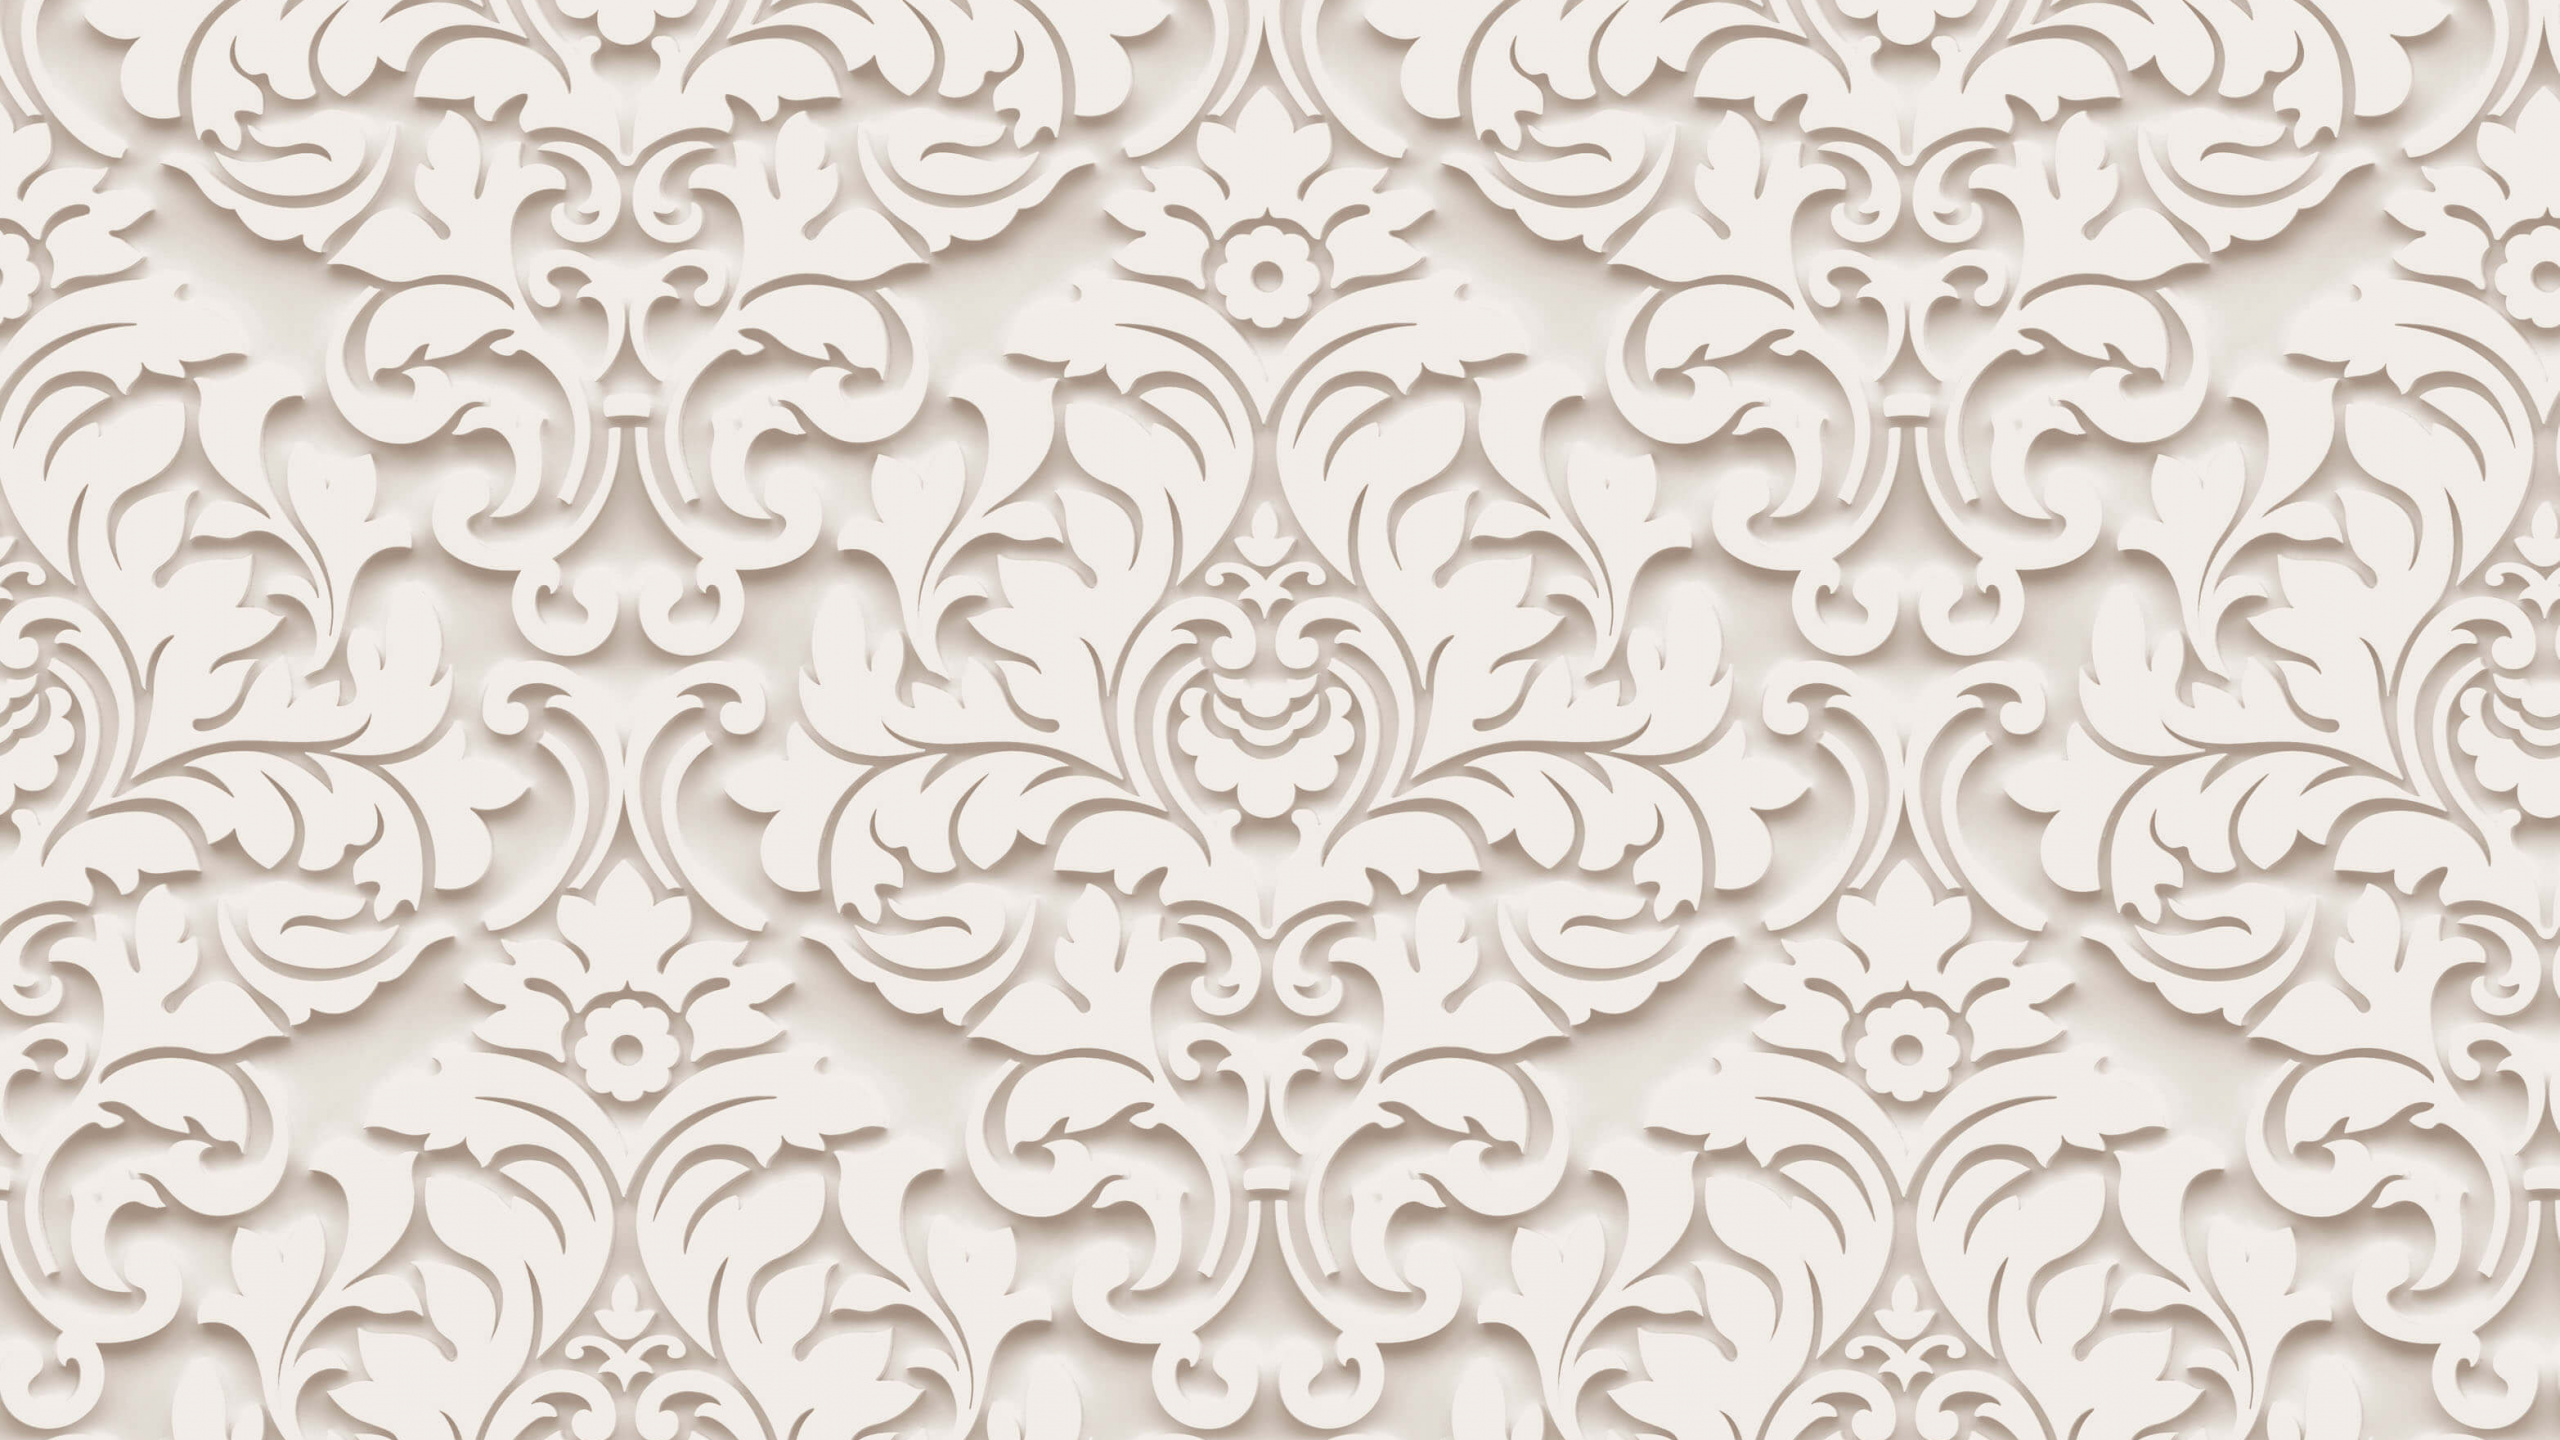 Textil Floral Blanco y Negro. Wallpaper in 2560x1440 Resolution